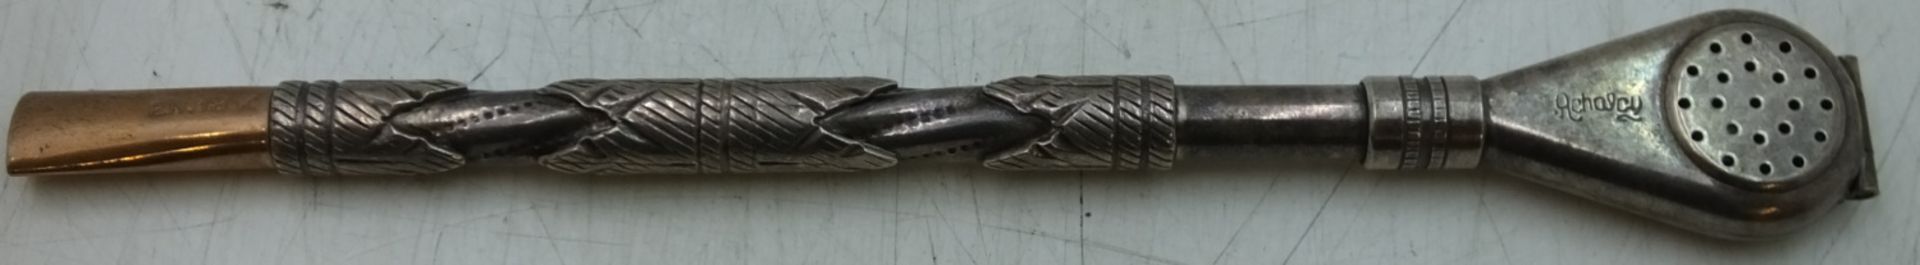 ALPACA Metal Straw for Yerba - Image 2 of 3